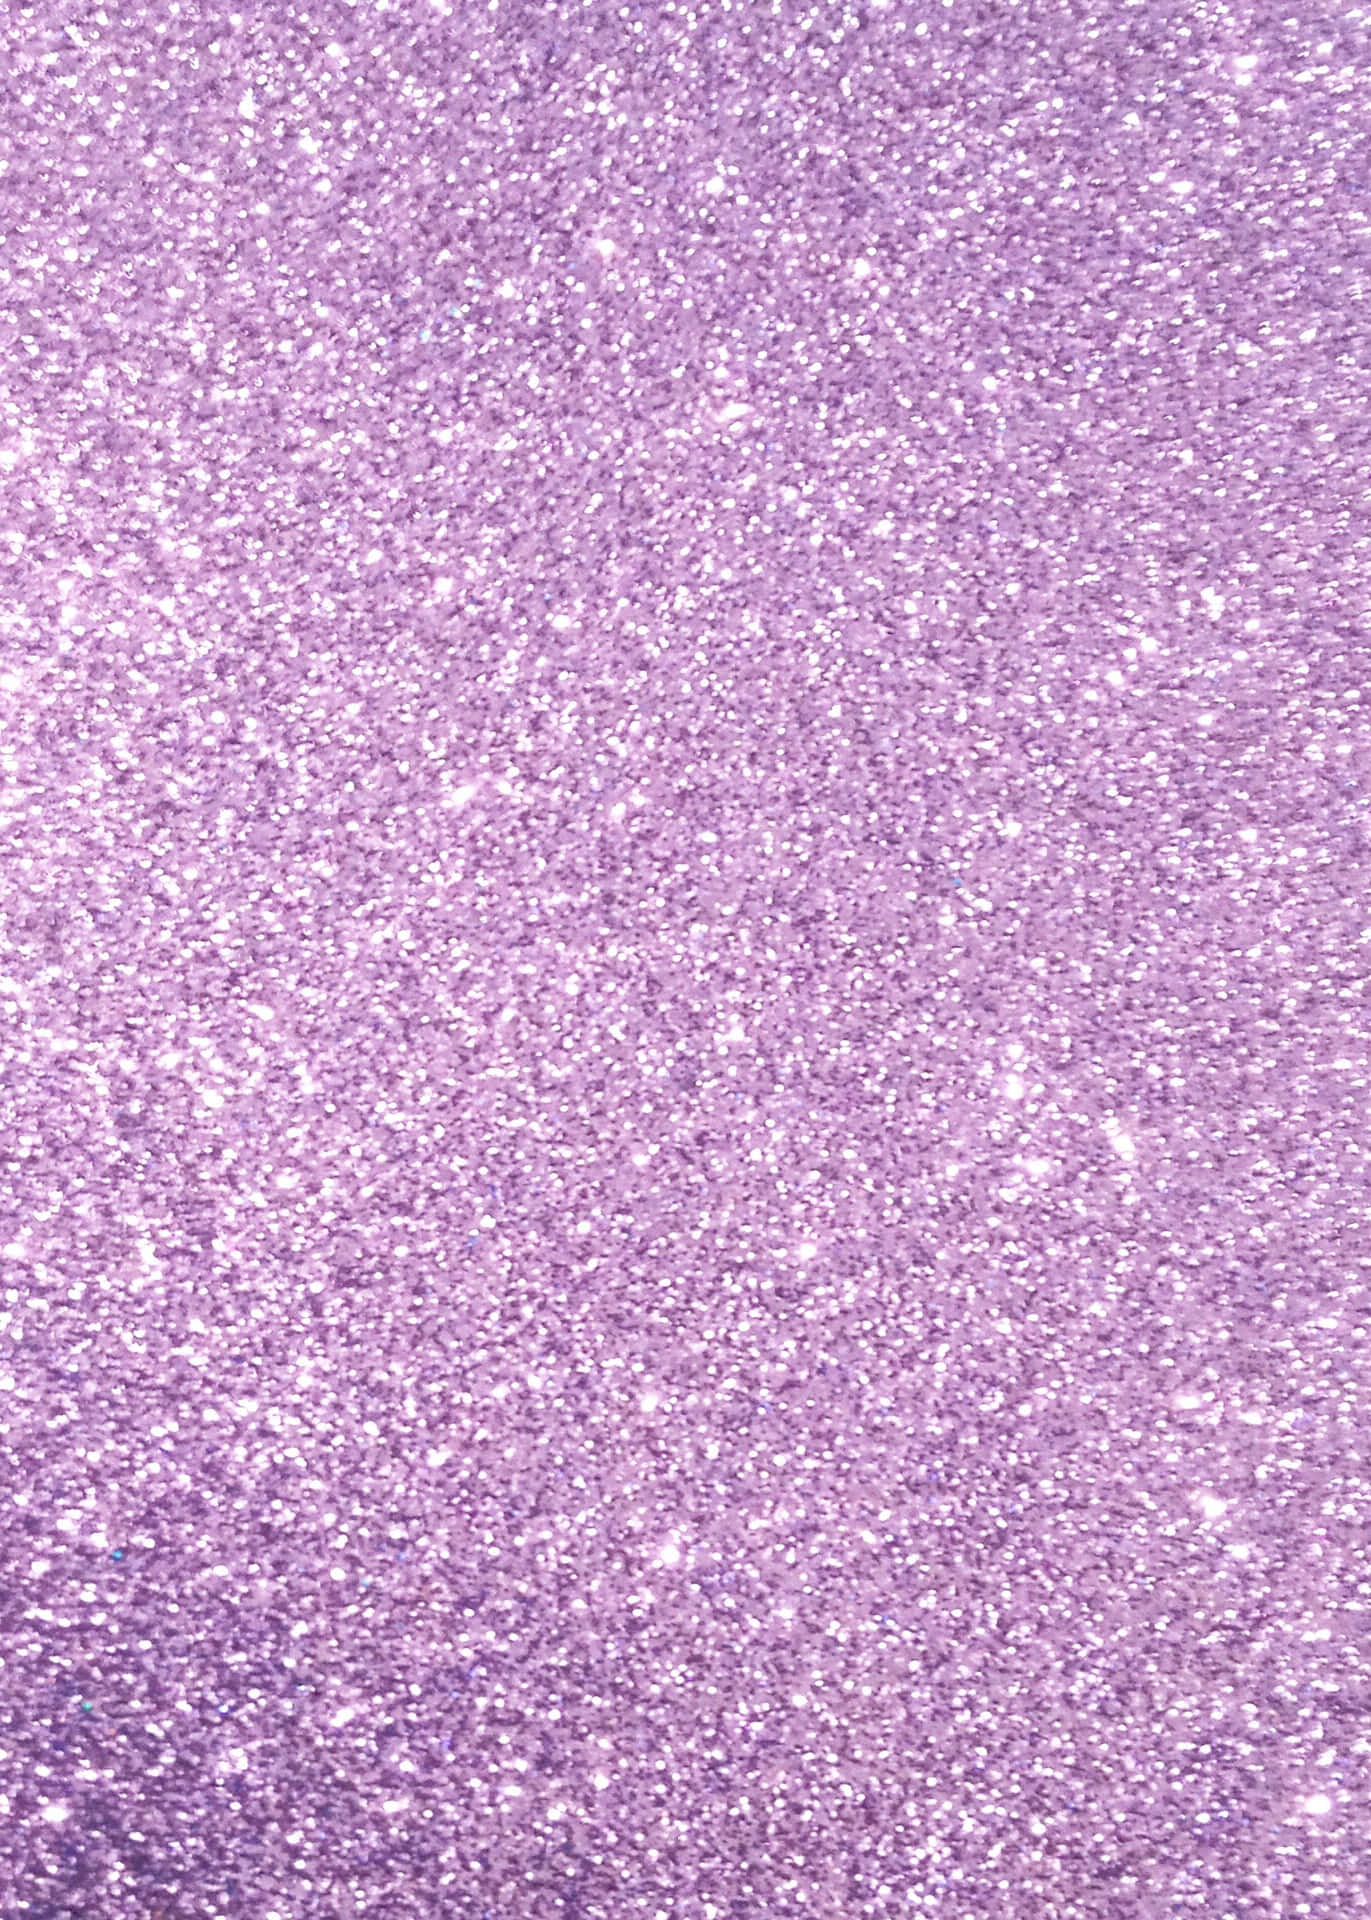 100+] Light Purple Glitter Backgrounds